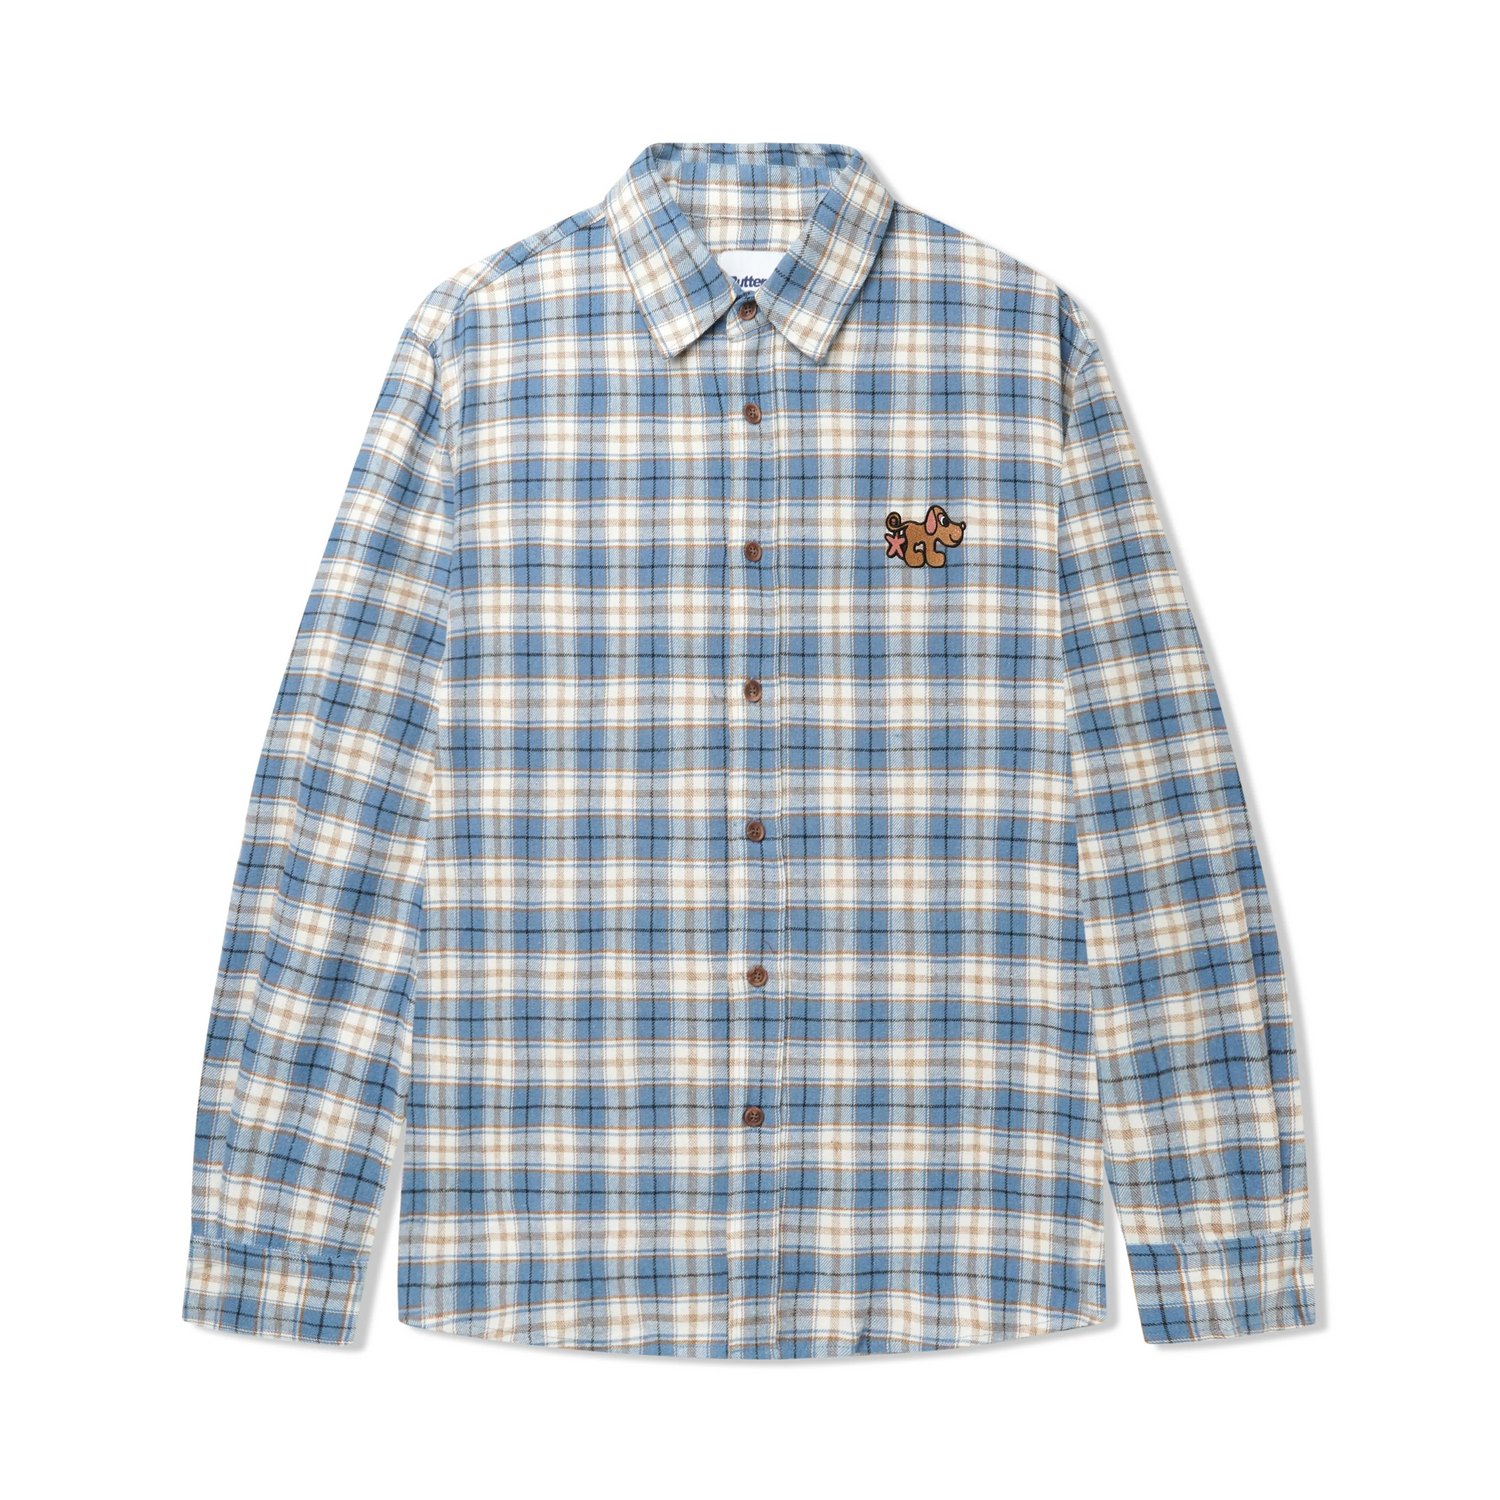 Pooch Flannel Shirt, Sky Blue